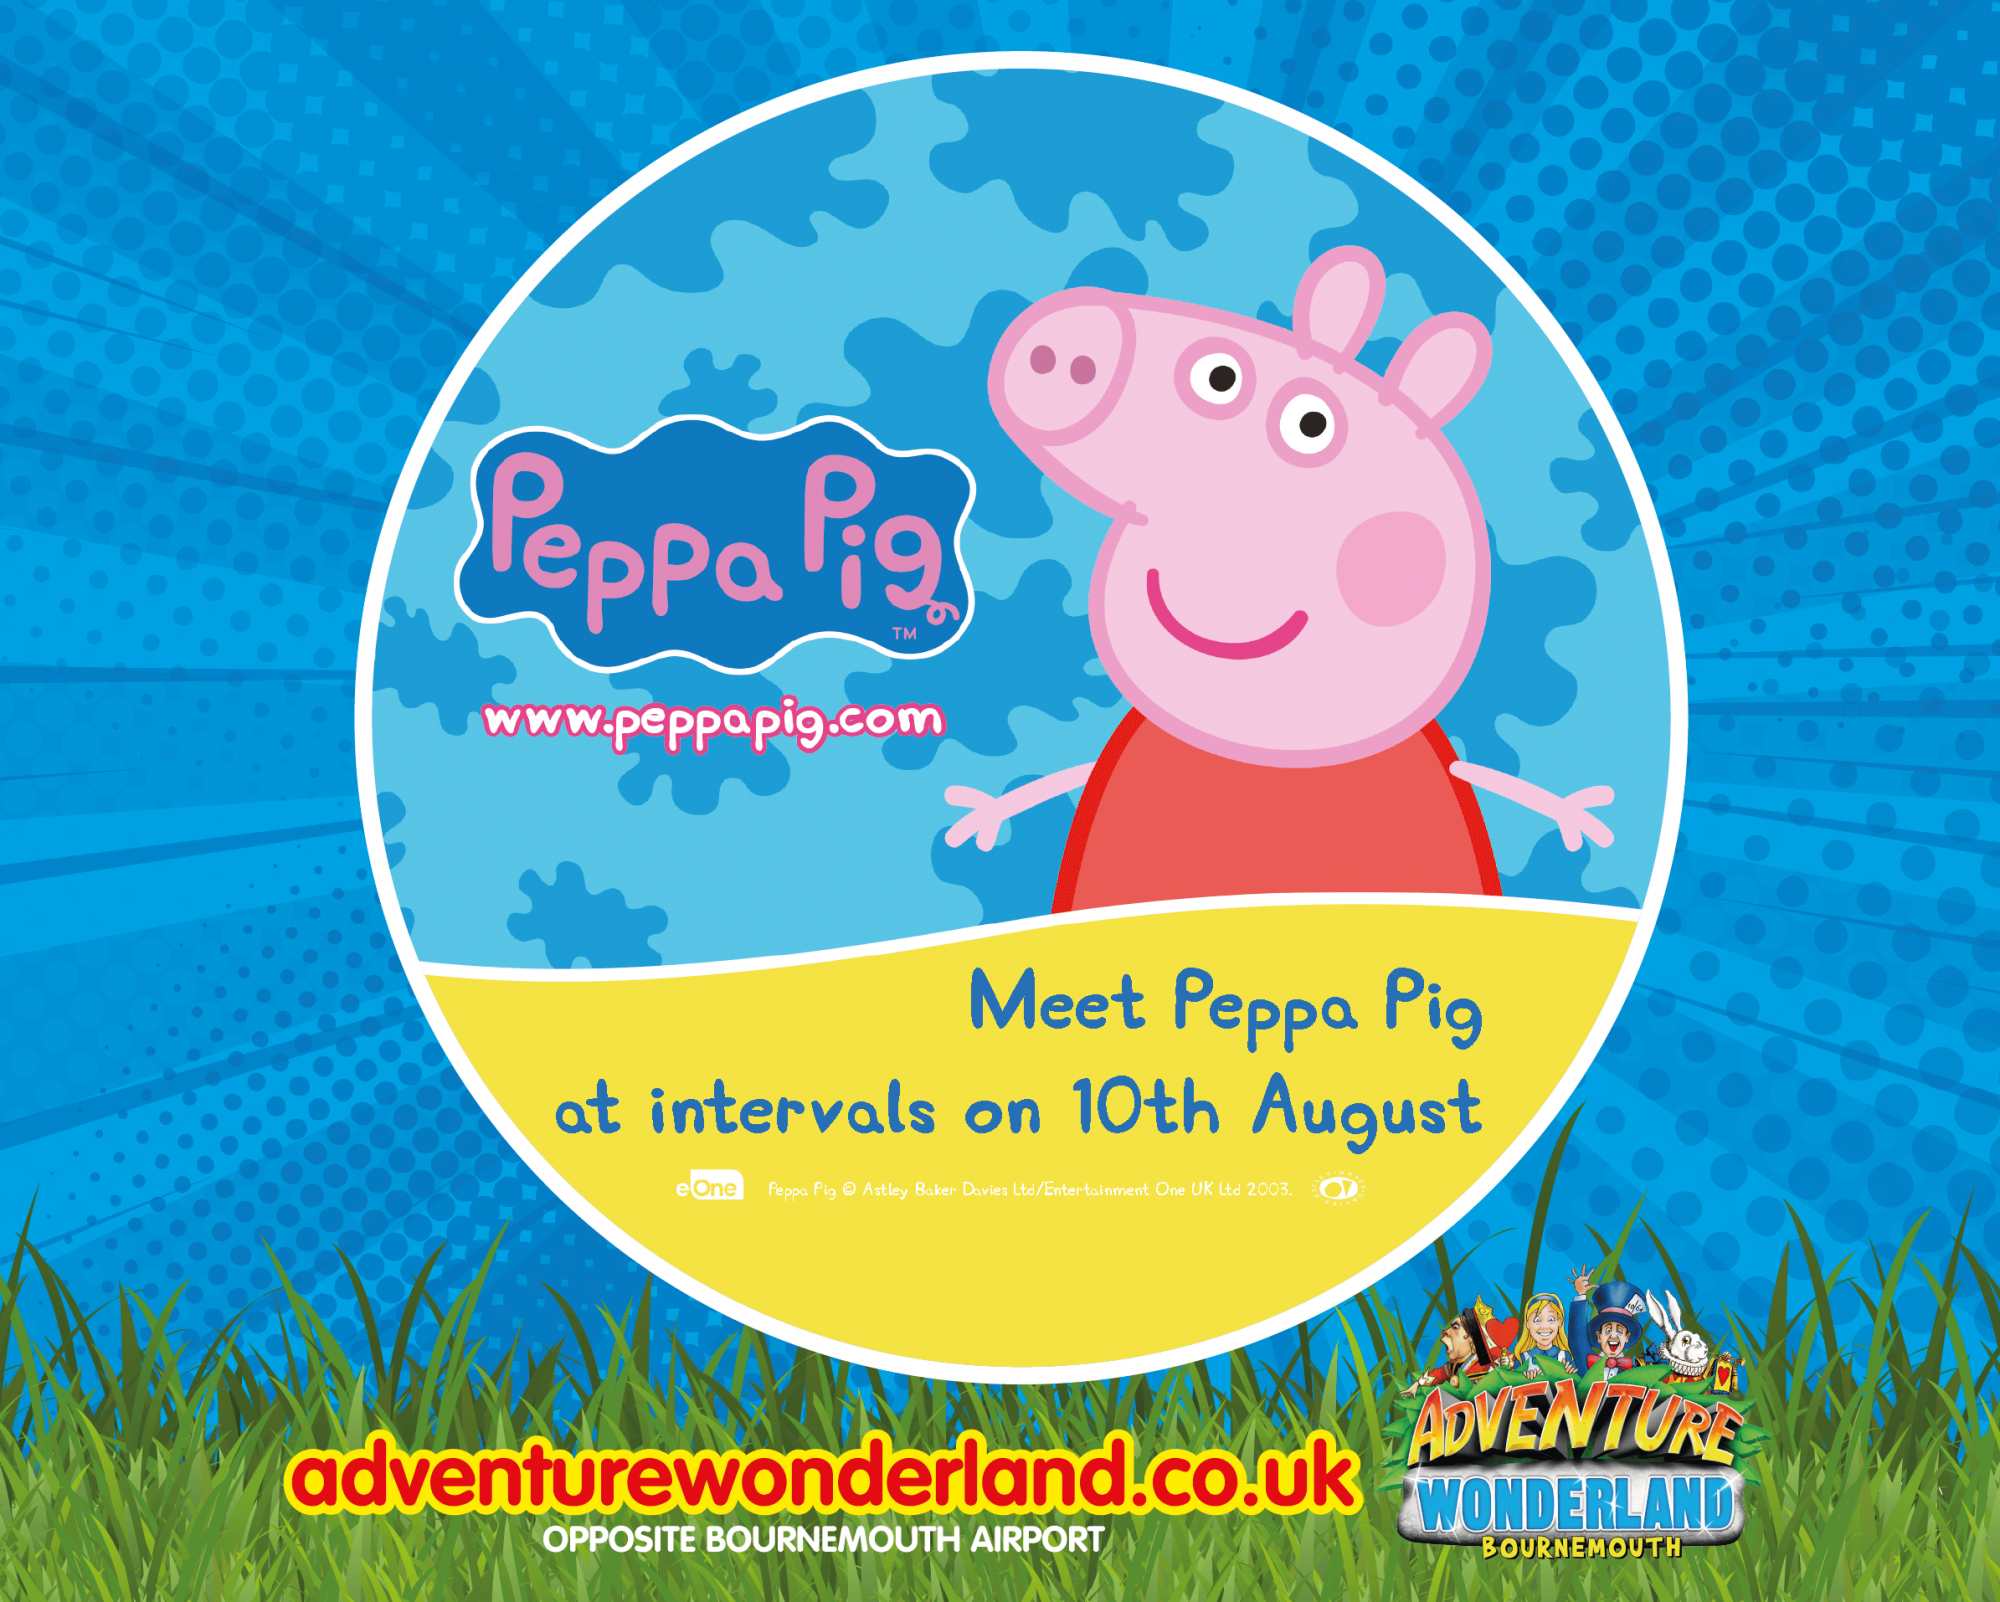 Peppa Adventure Wonderland